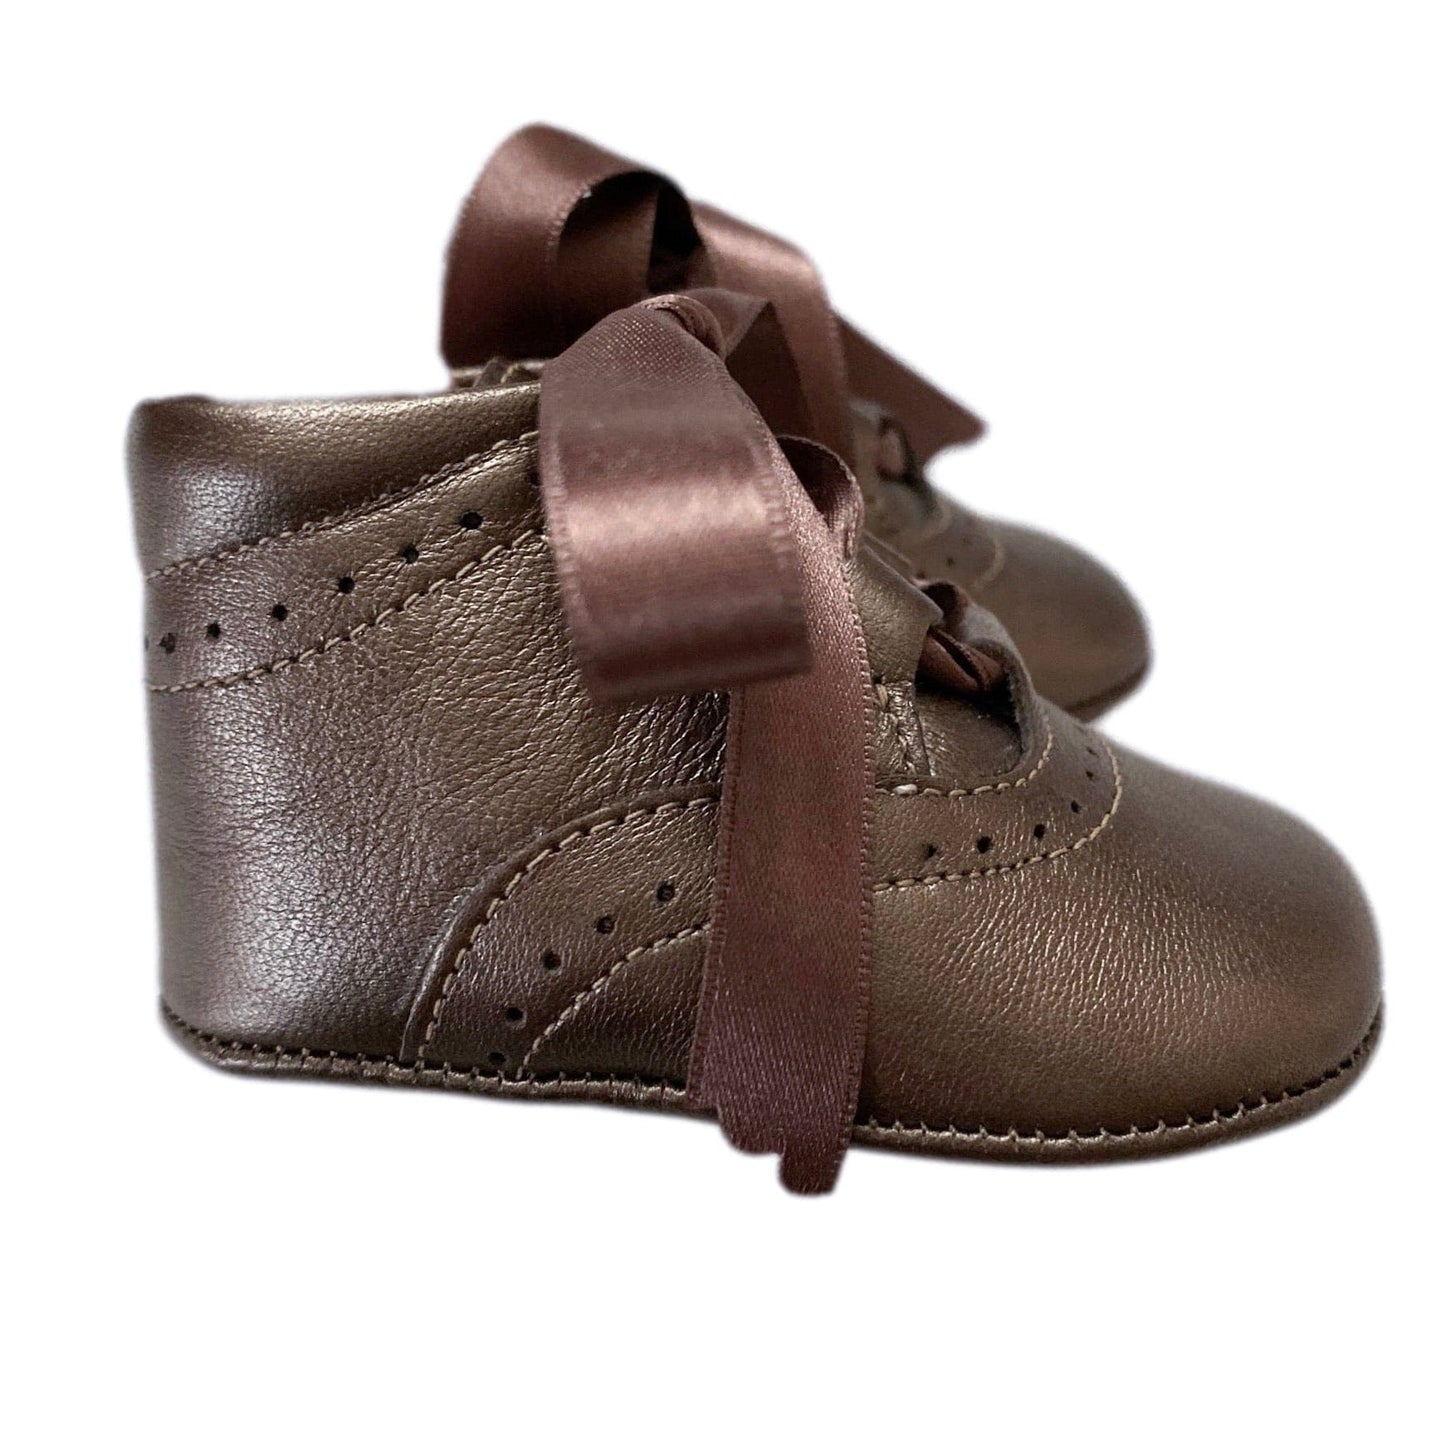 Metallic Brown Calfskin Leather Prewalkers - Petit Maison Kids